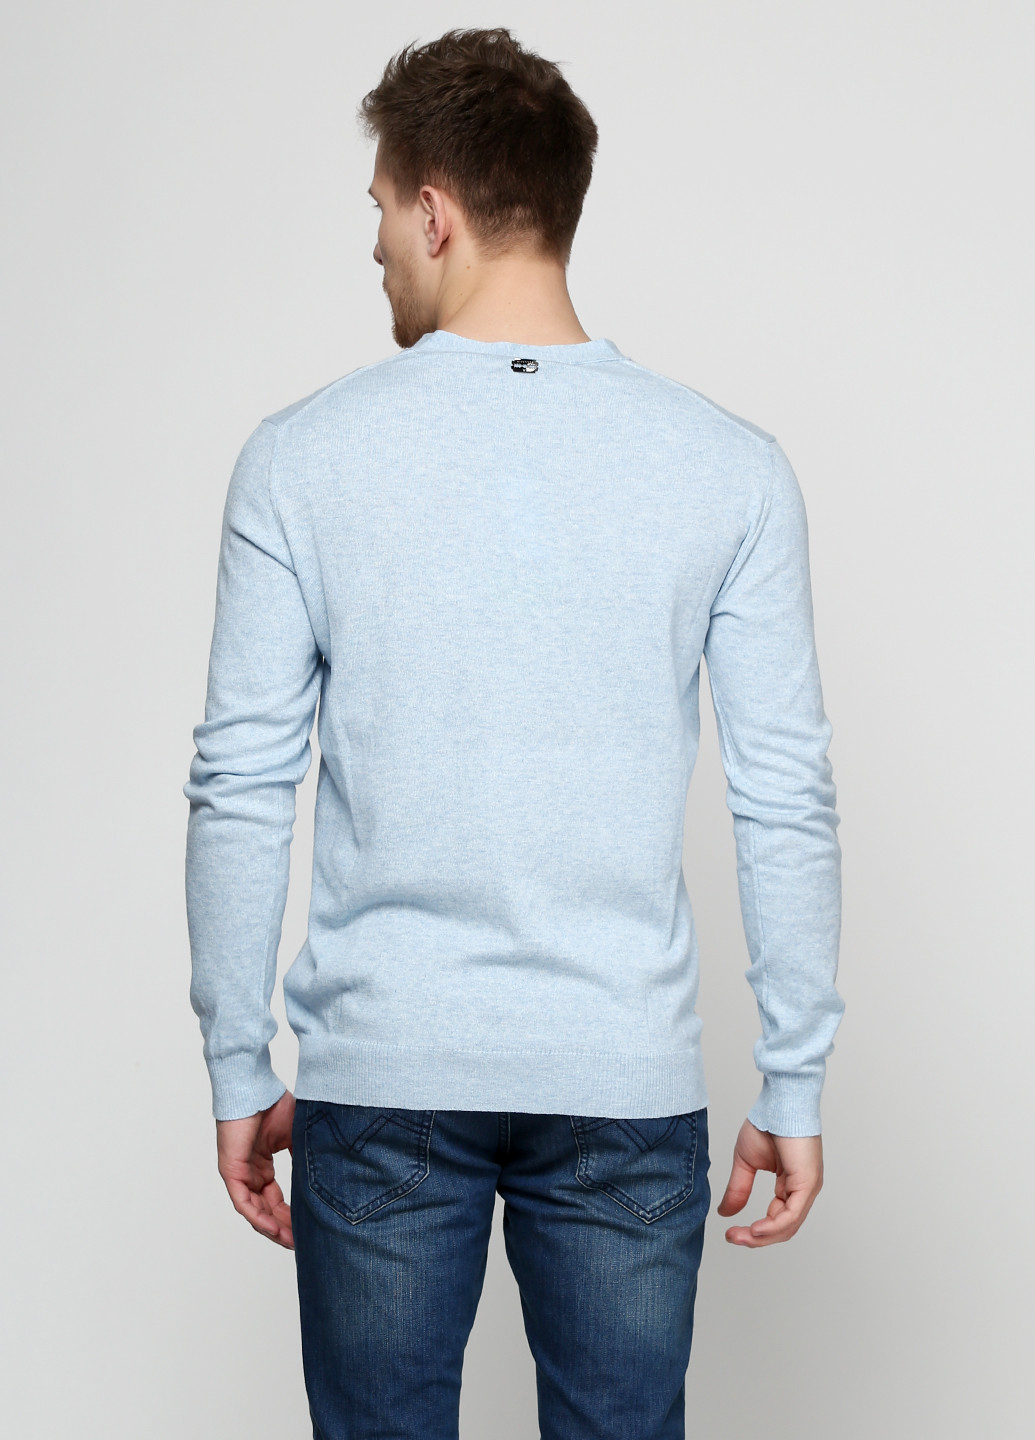 Голубой демисезонный пуловер пуловер Richmond X